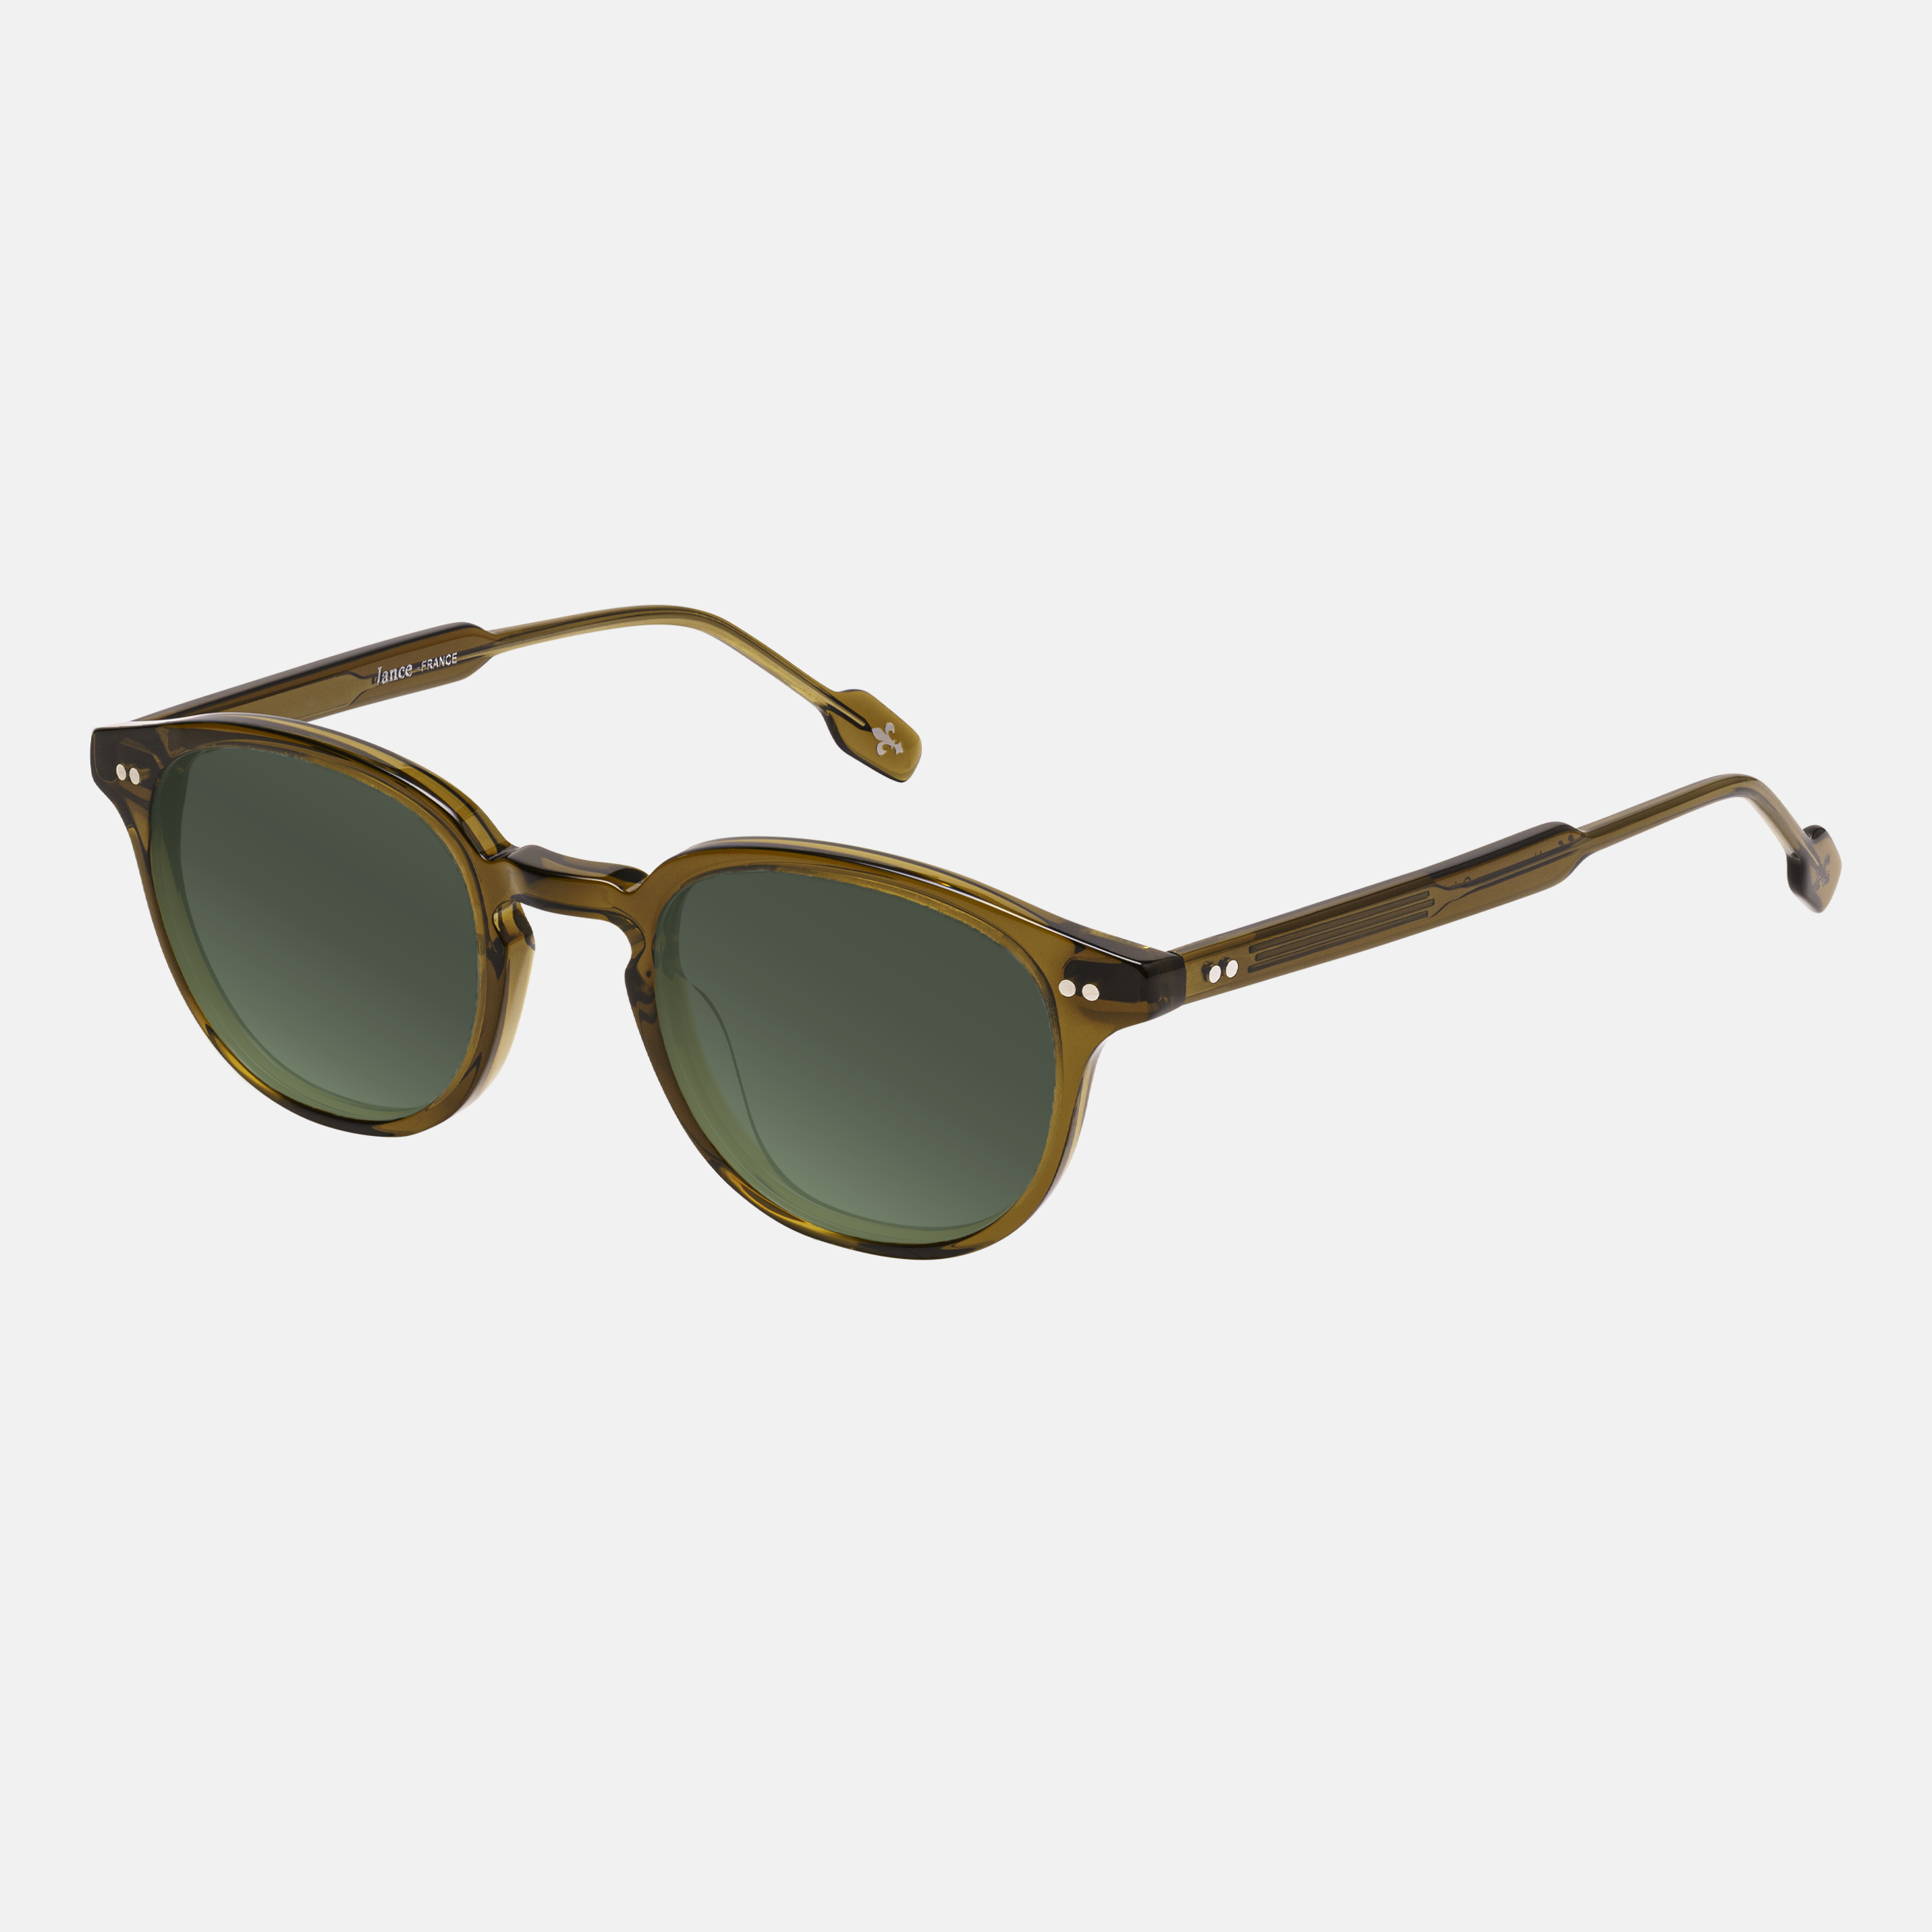 Haussmann Original Sunglasses | Signature